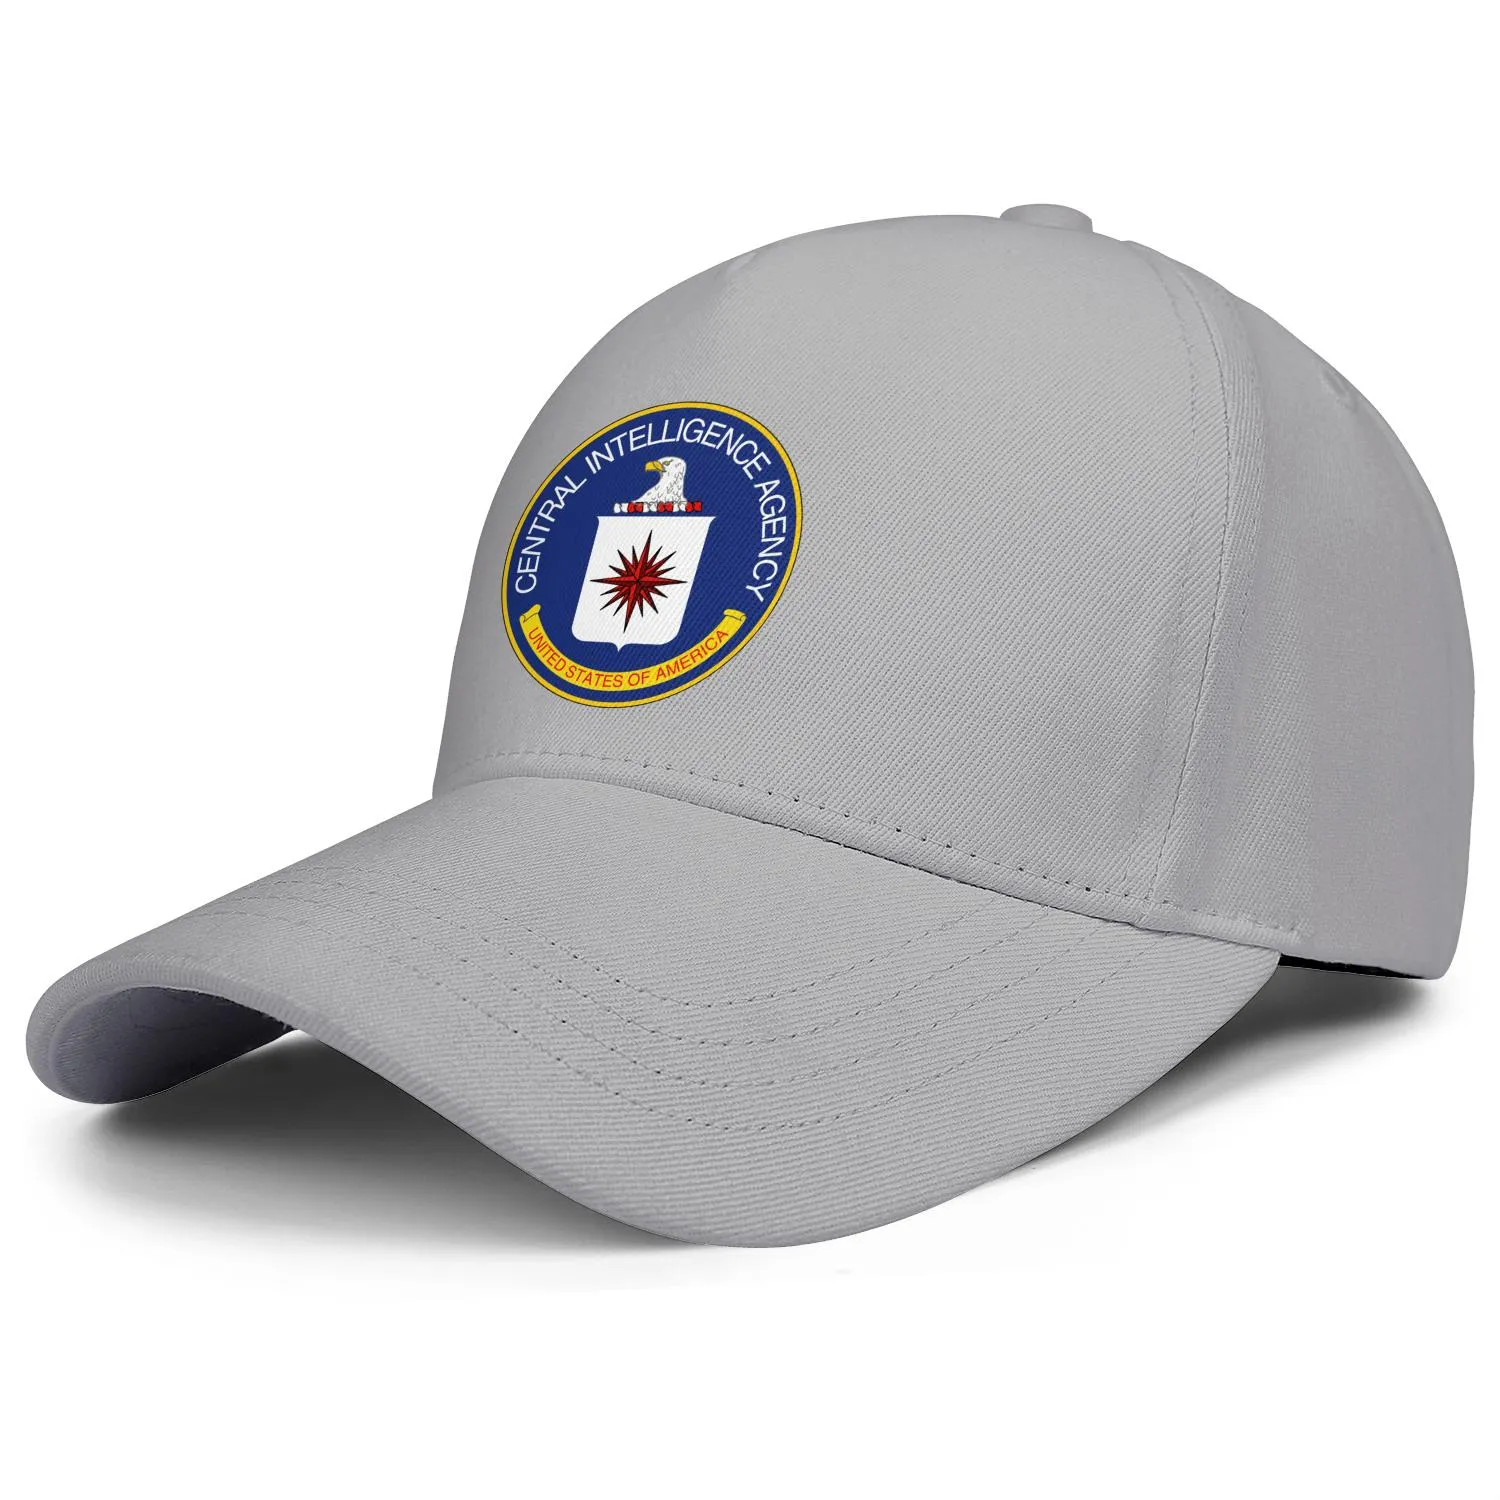 Central Intelligence Agency Logo mens and women adjustable trucker cap cool vintage personalized original baseballhats223m4060758